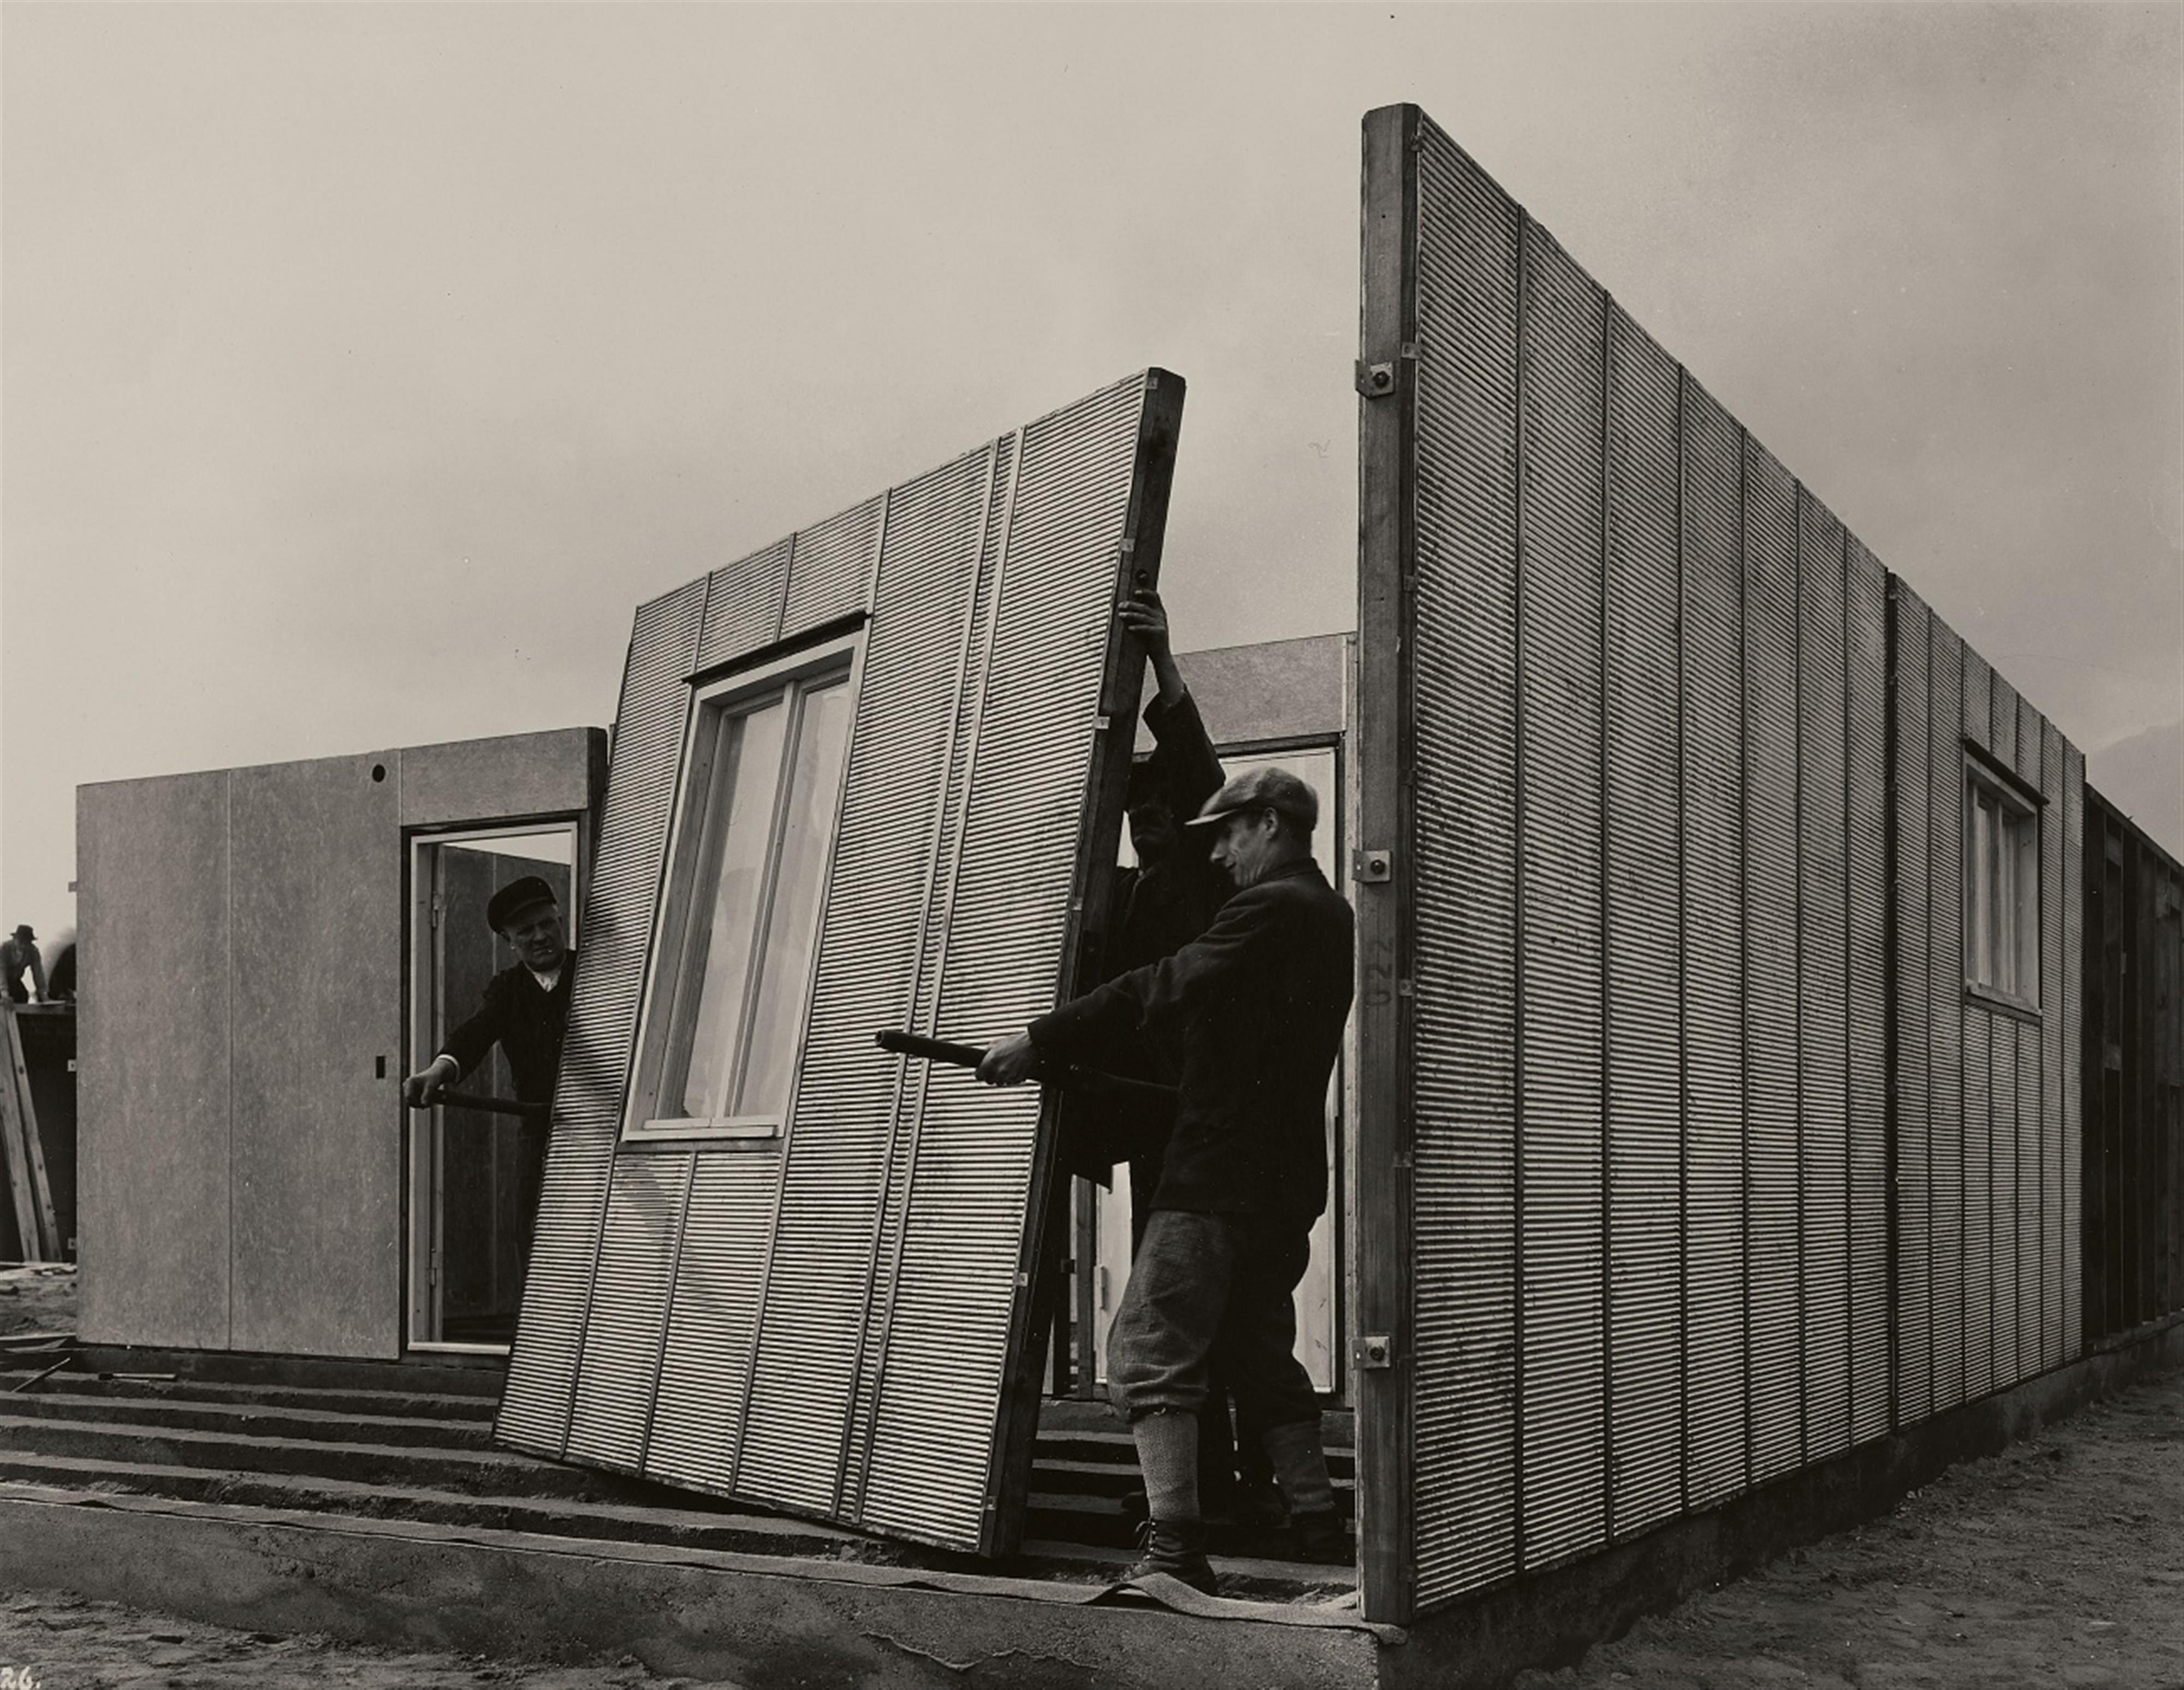 Arthur Koester
Leitner - Ausstellung "Das wachsende Haus", Berlin - image-4